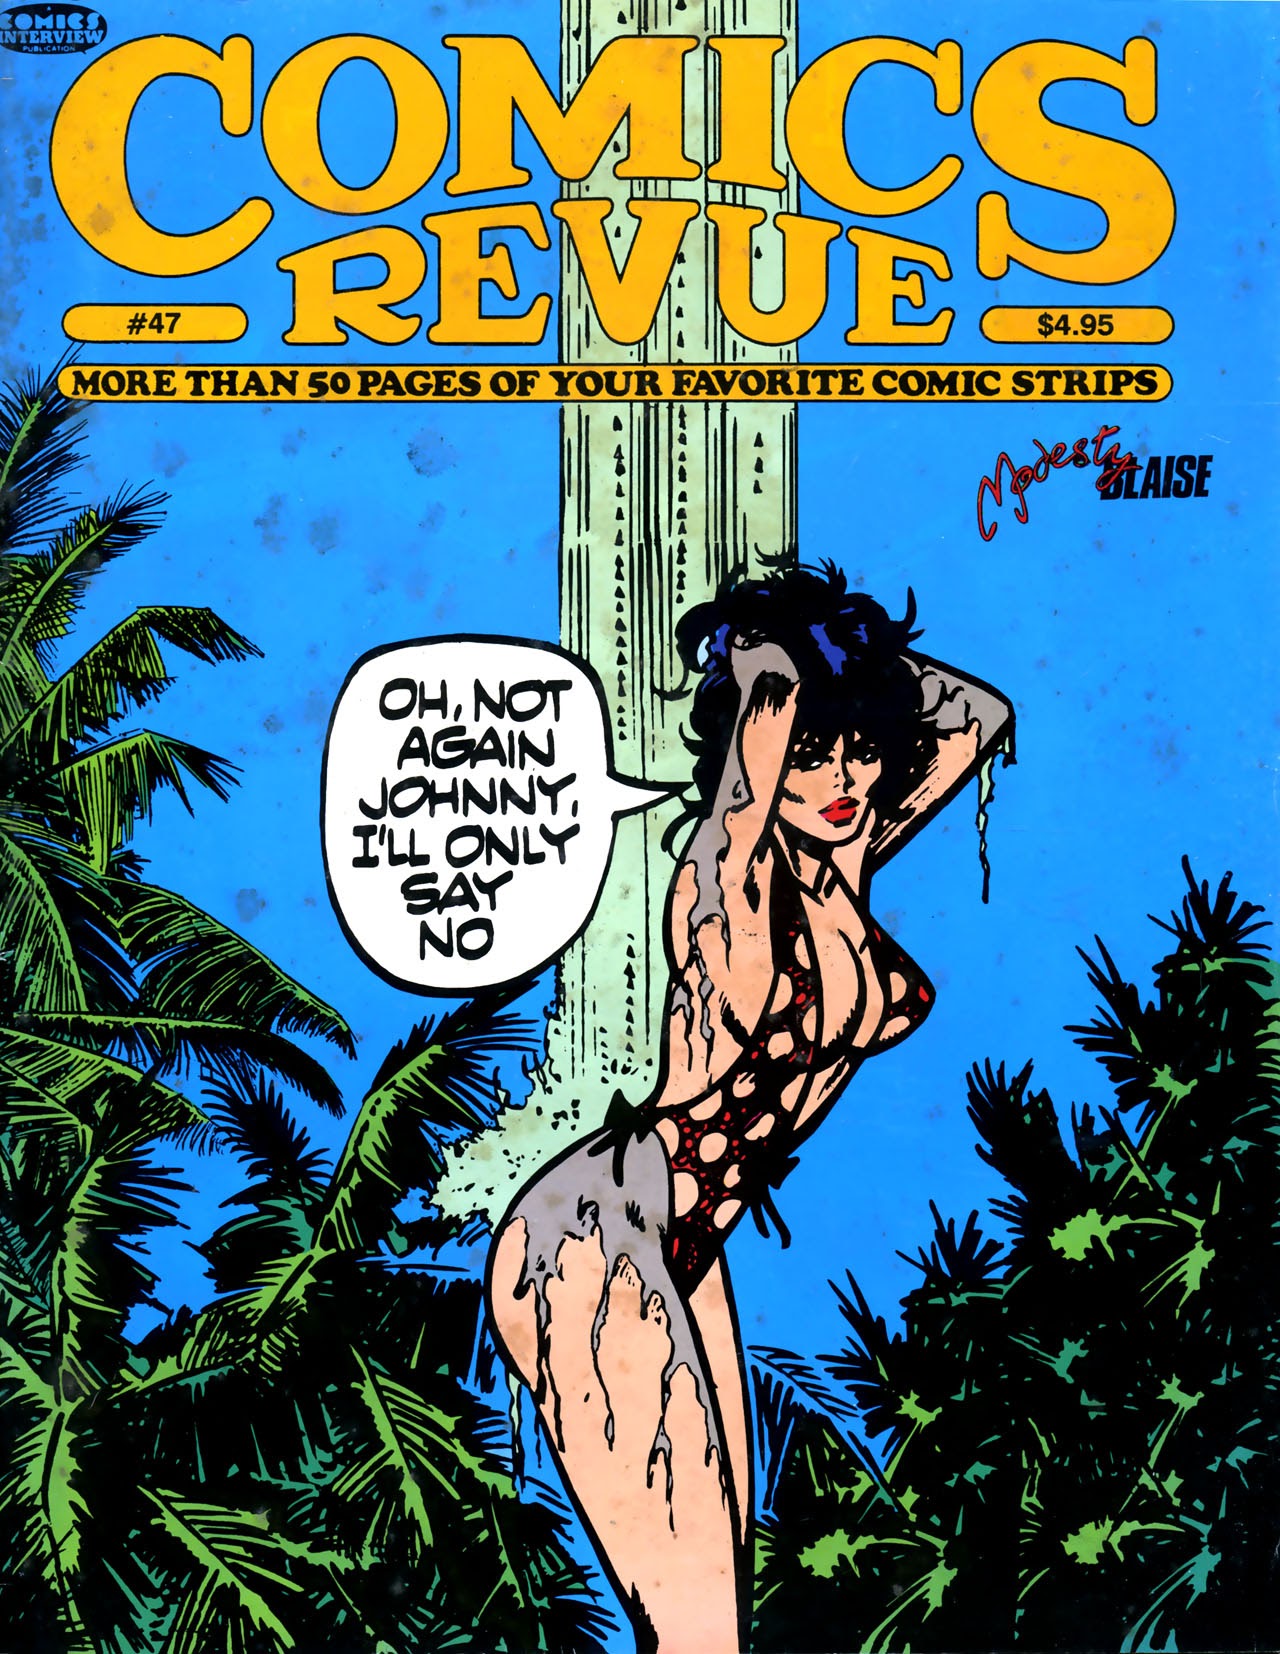 Read online Comics Revue comic -  Issue #47 - 1